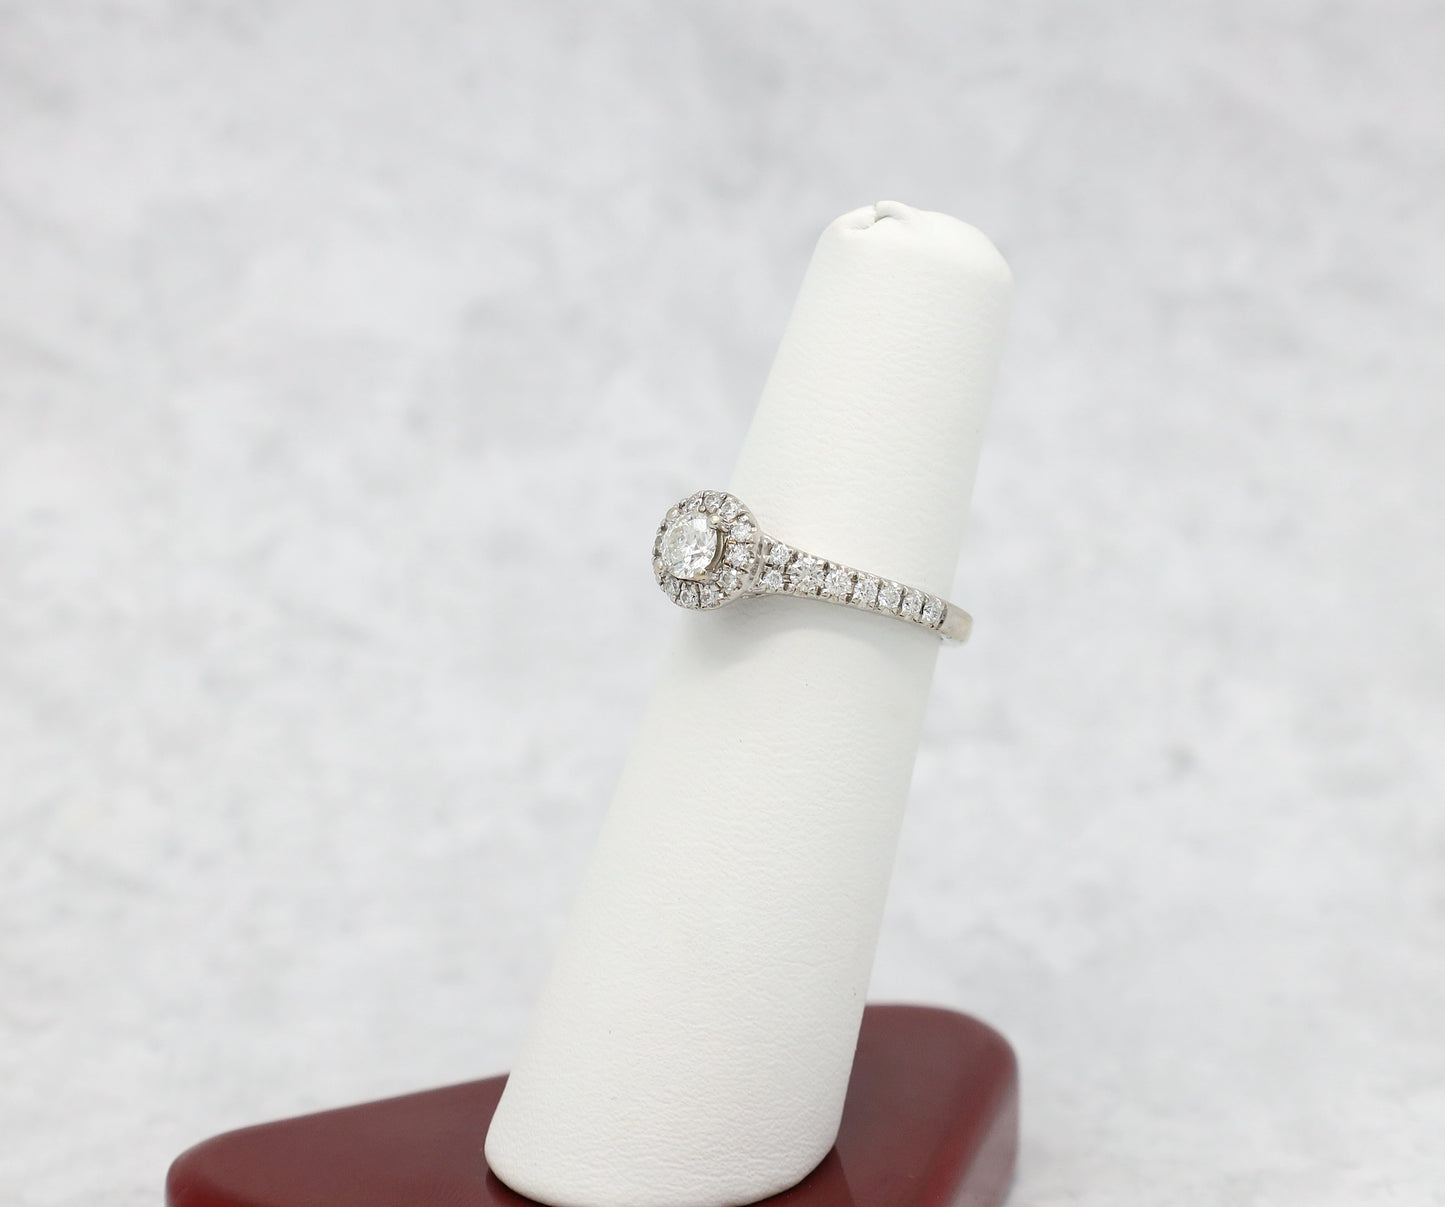 Tolkowsky 14k White Gold Diamond Engagement Ring, Size 6 - 3.5g